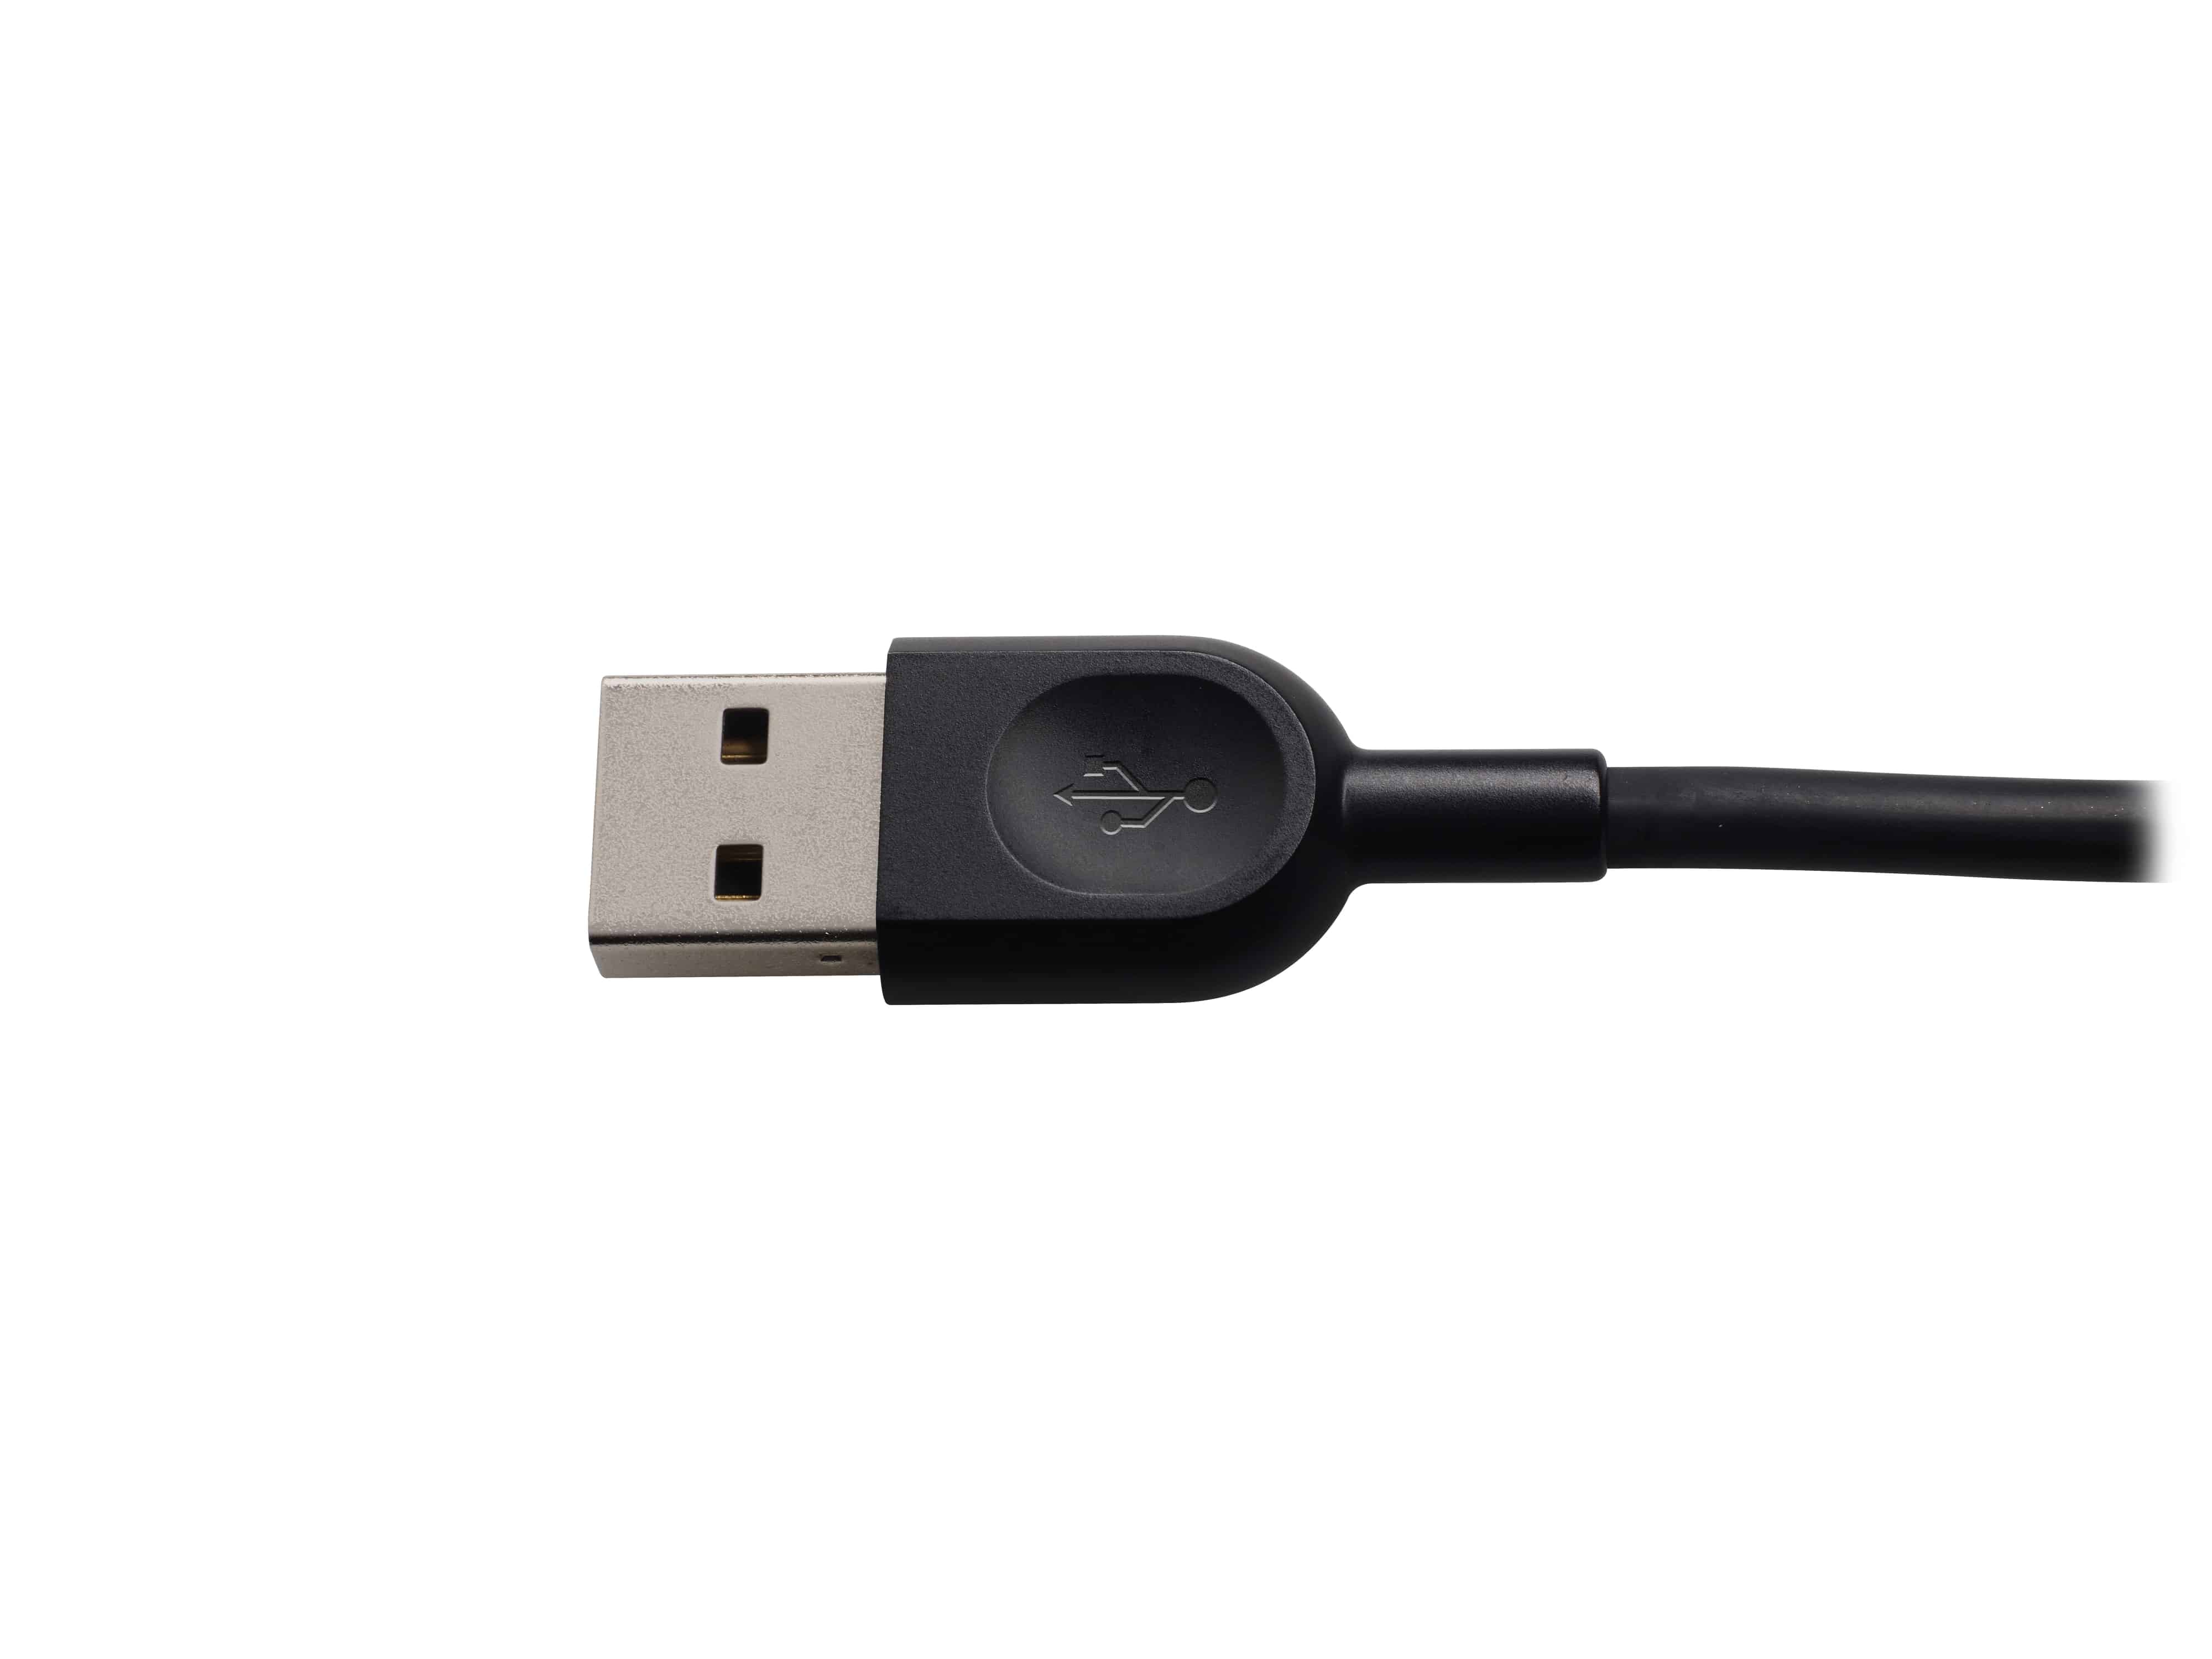 LOGITECH Headset H540 USB, schwarz